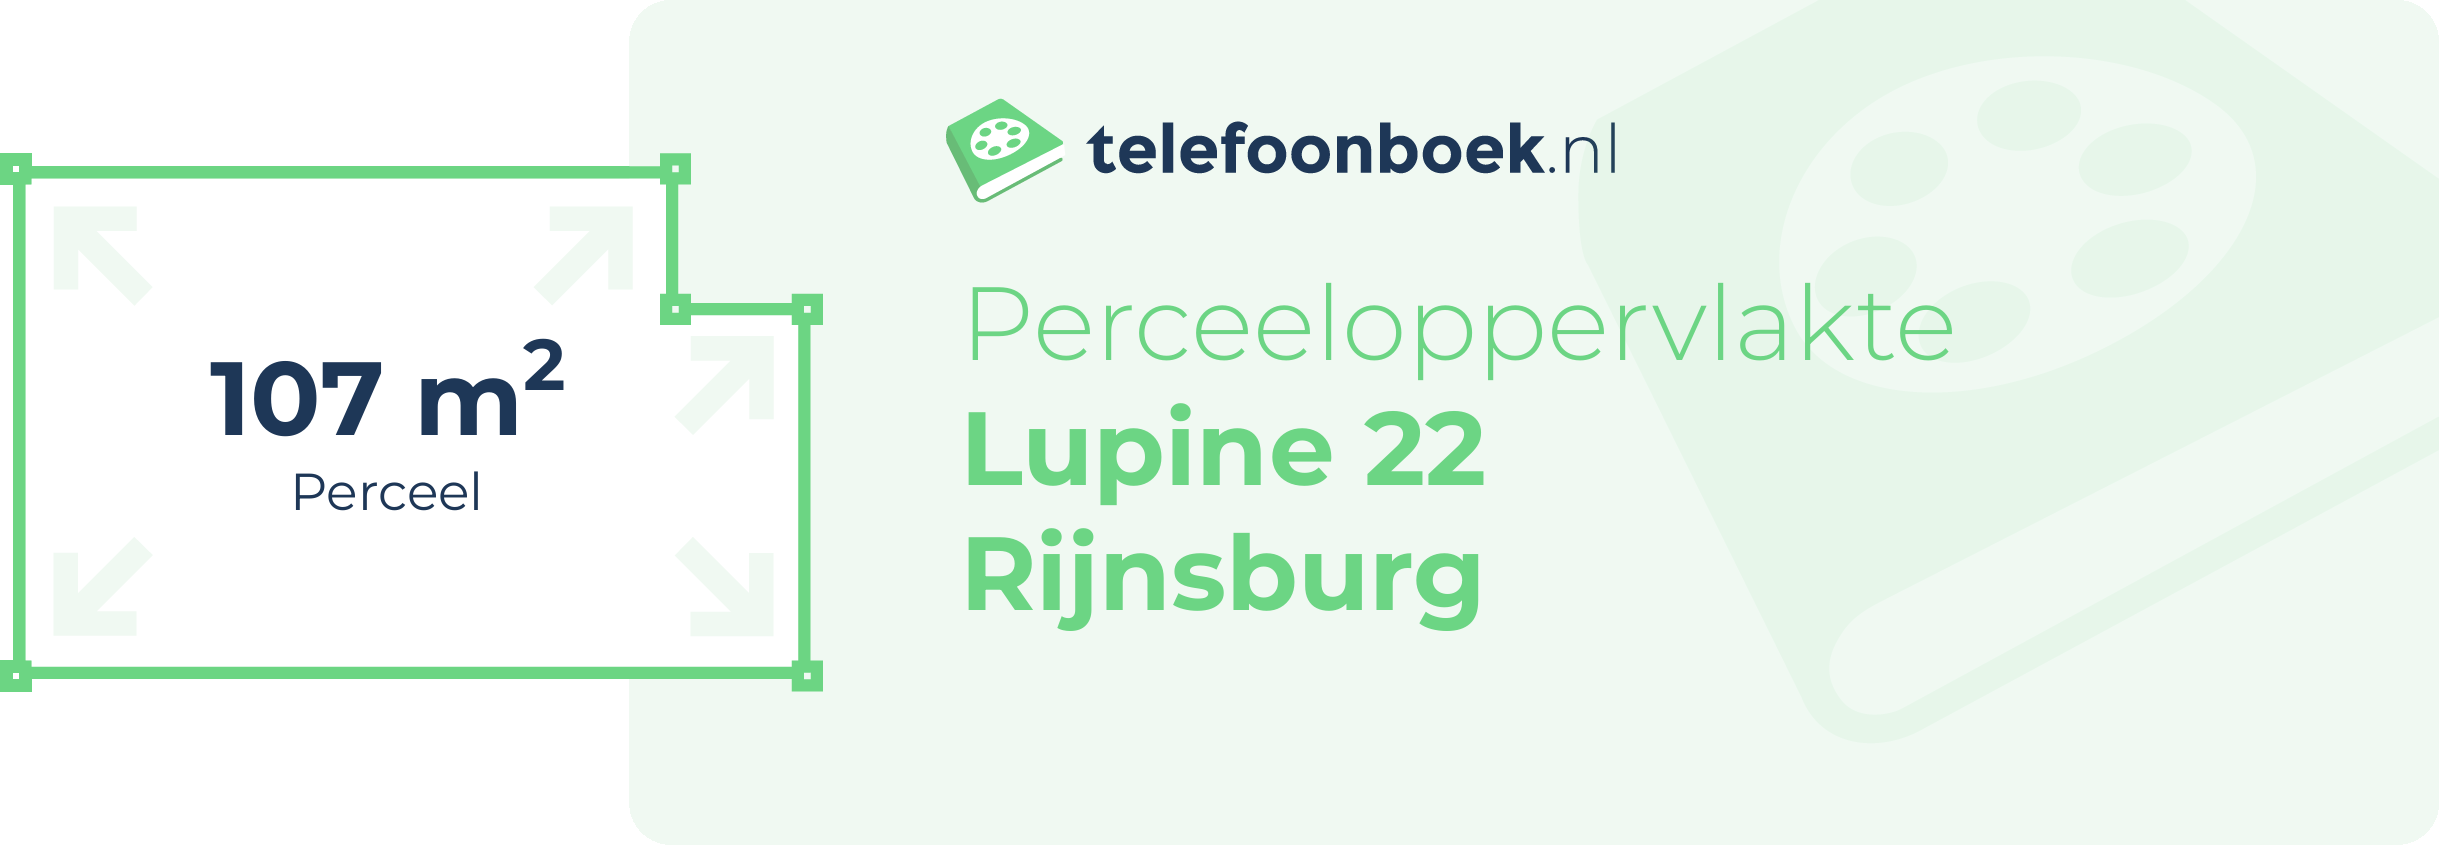 Perceeloppervlakte Lupine 22 Rijnsburg